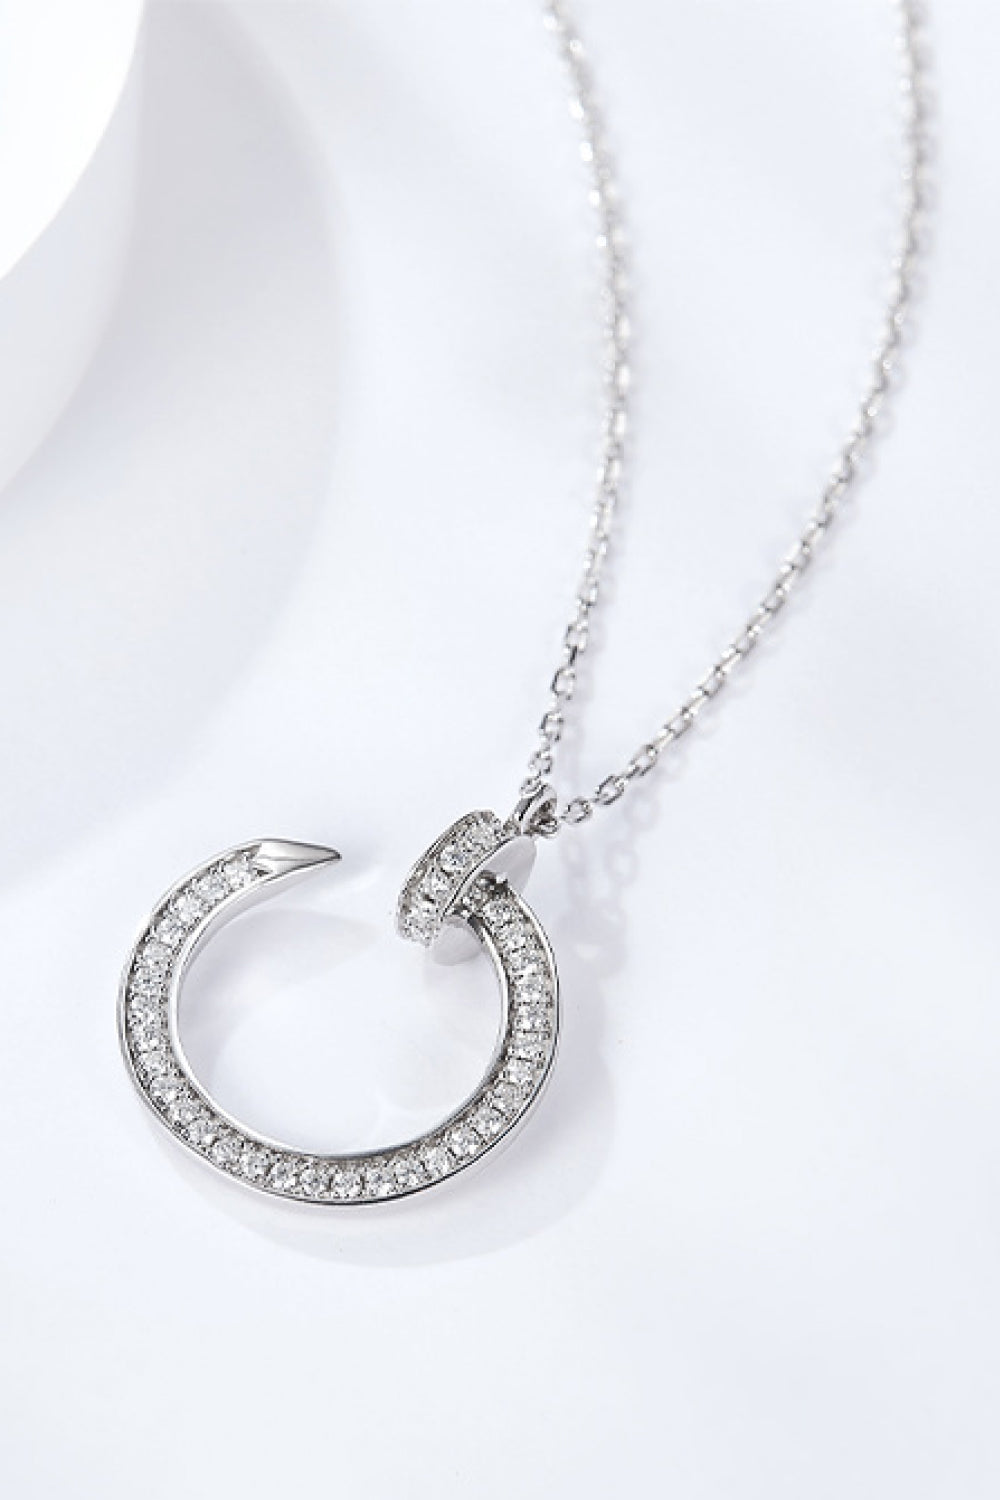 1 Carat Moissanite Open Ring Pendant Necklace